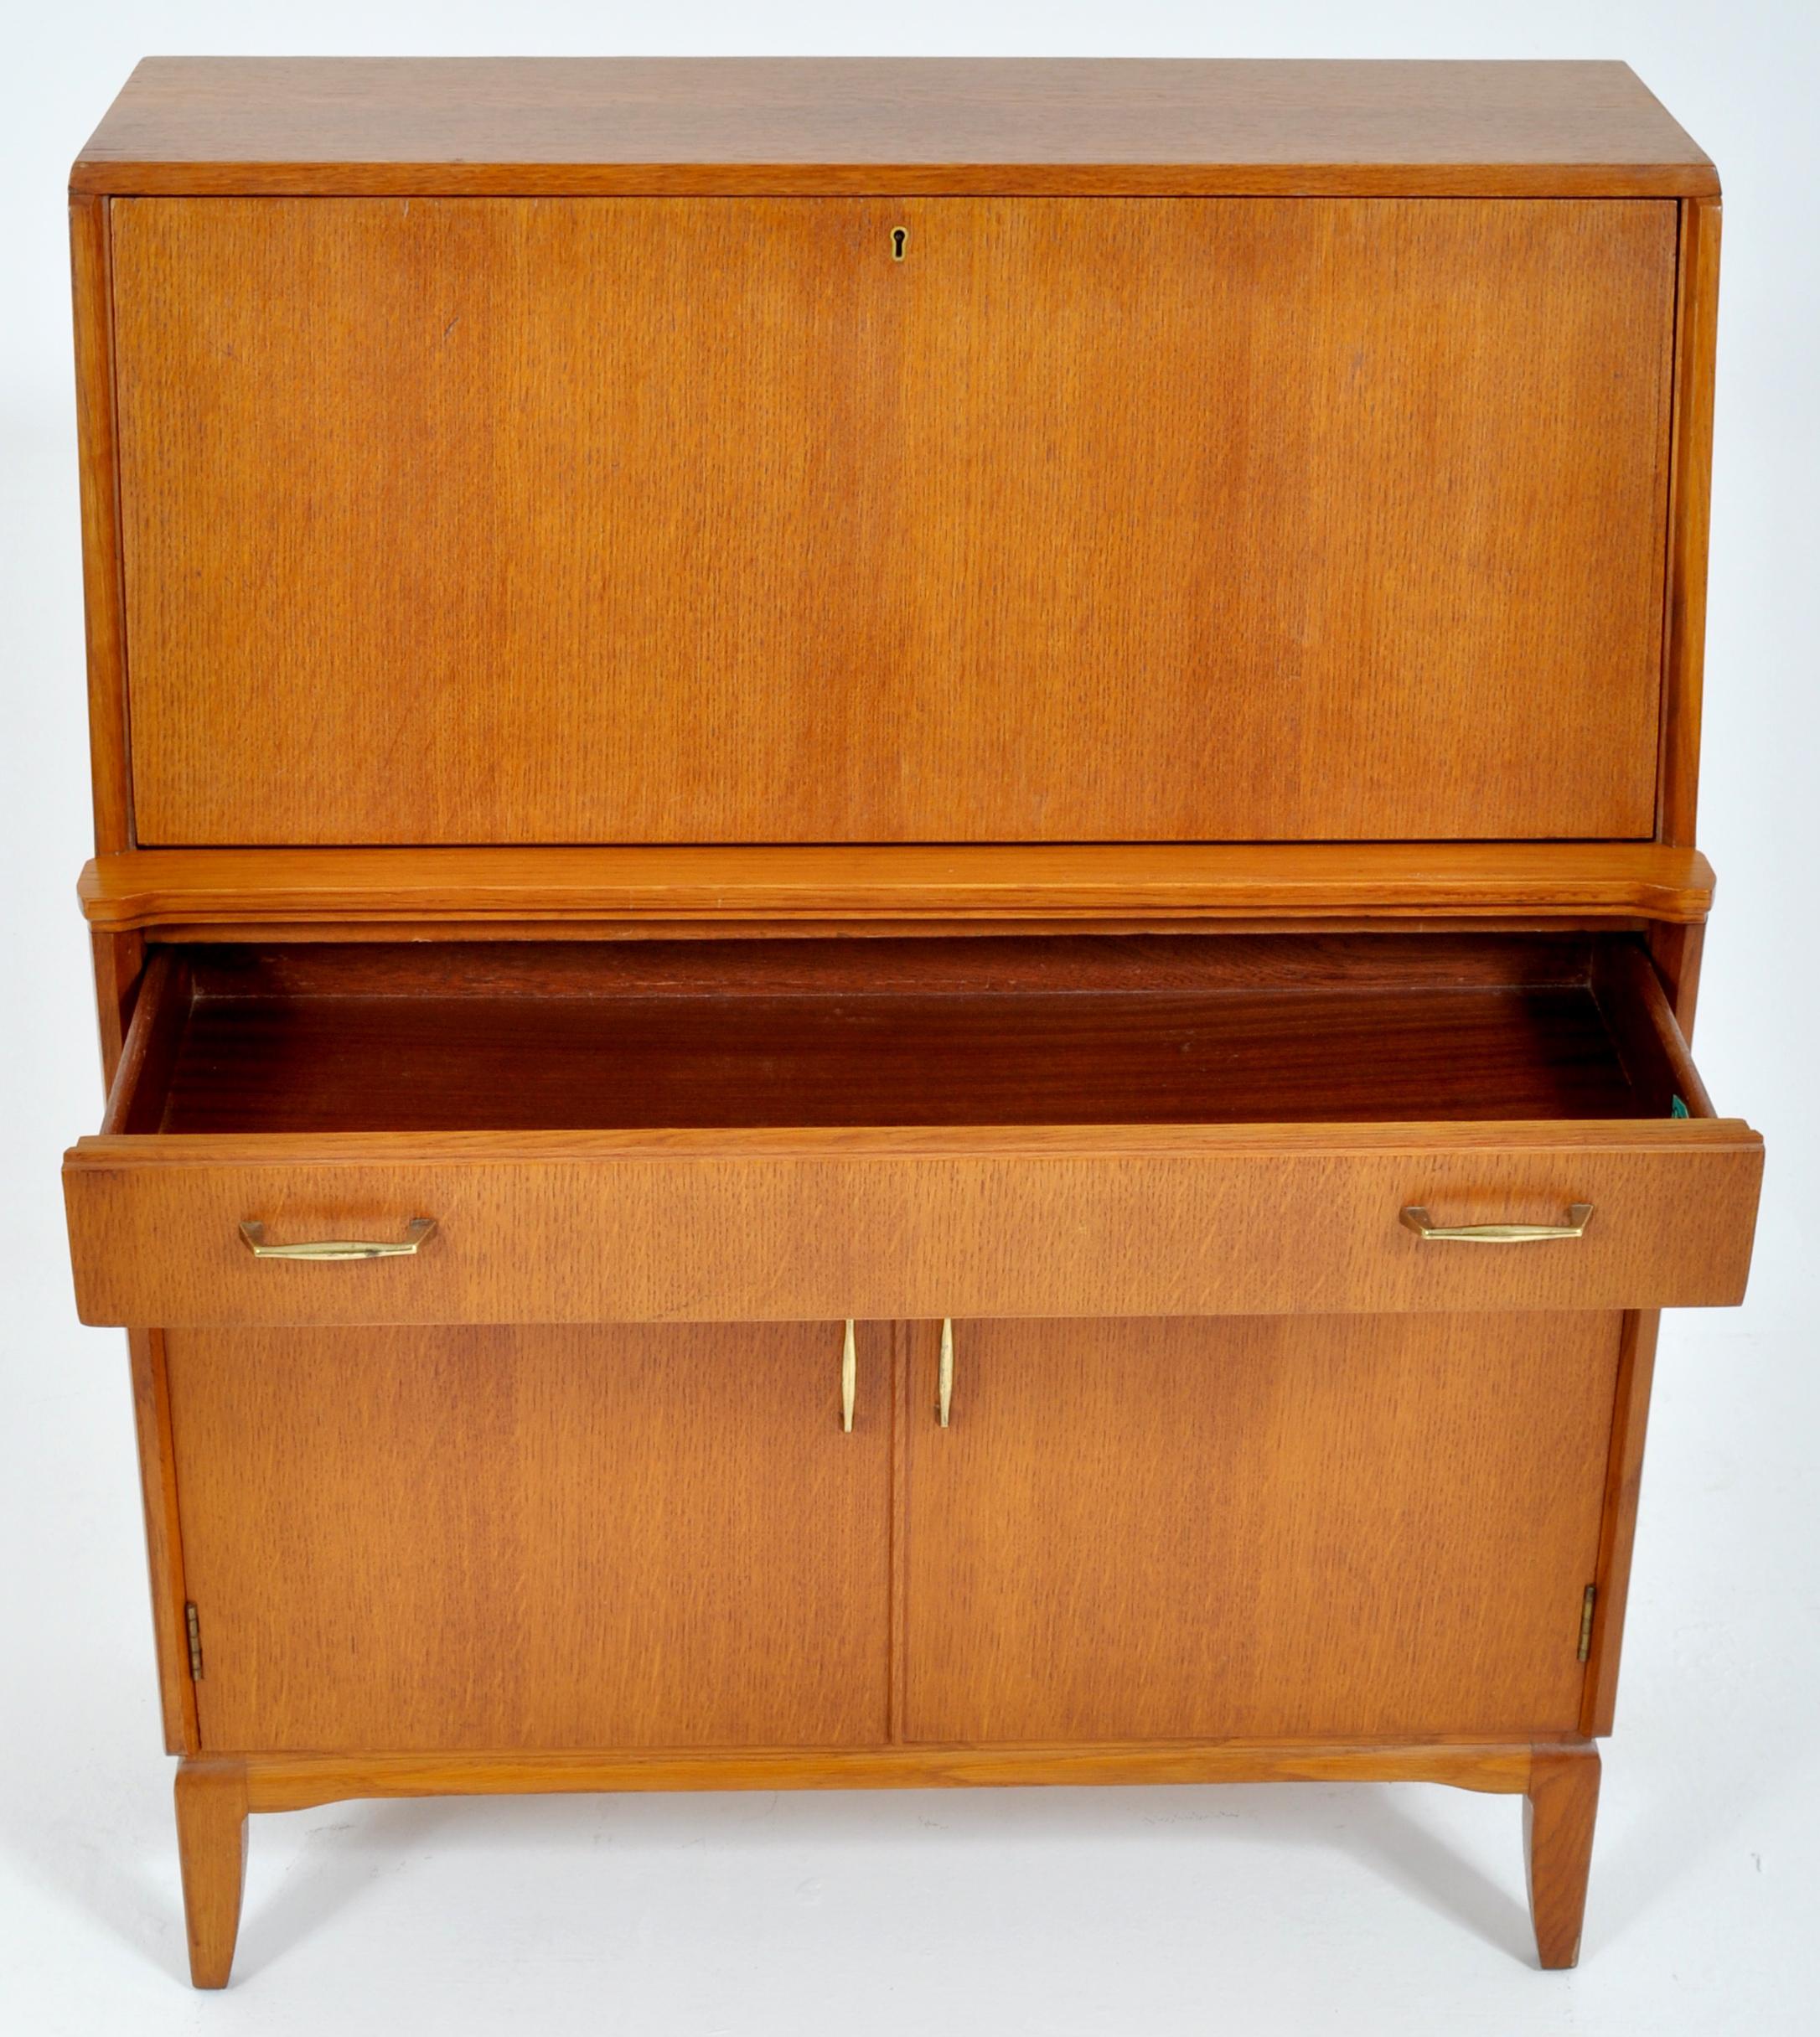 English Mid-Century Modern Danish Style Teak Secretary Desk/Cabinet by Lebus Furniture